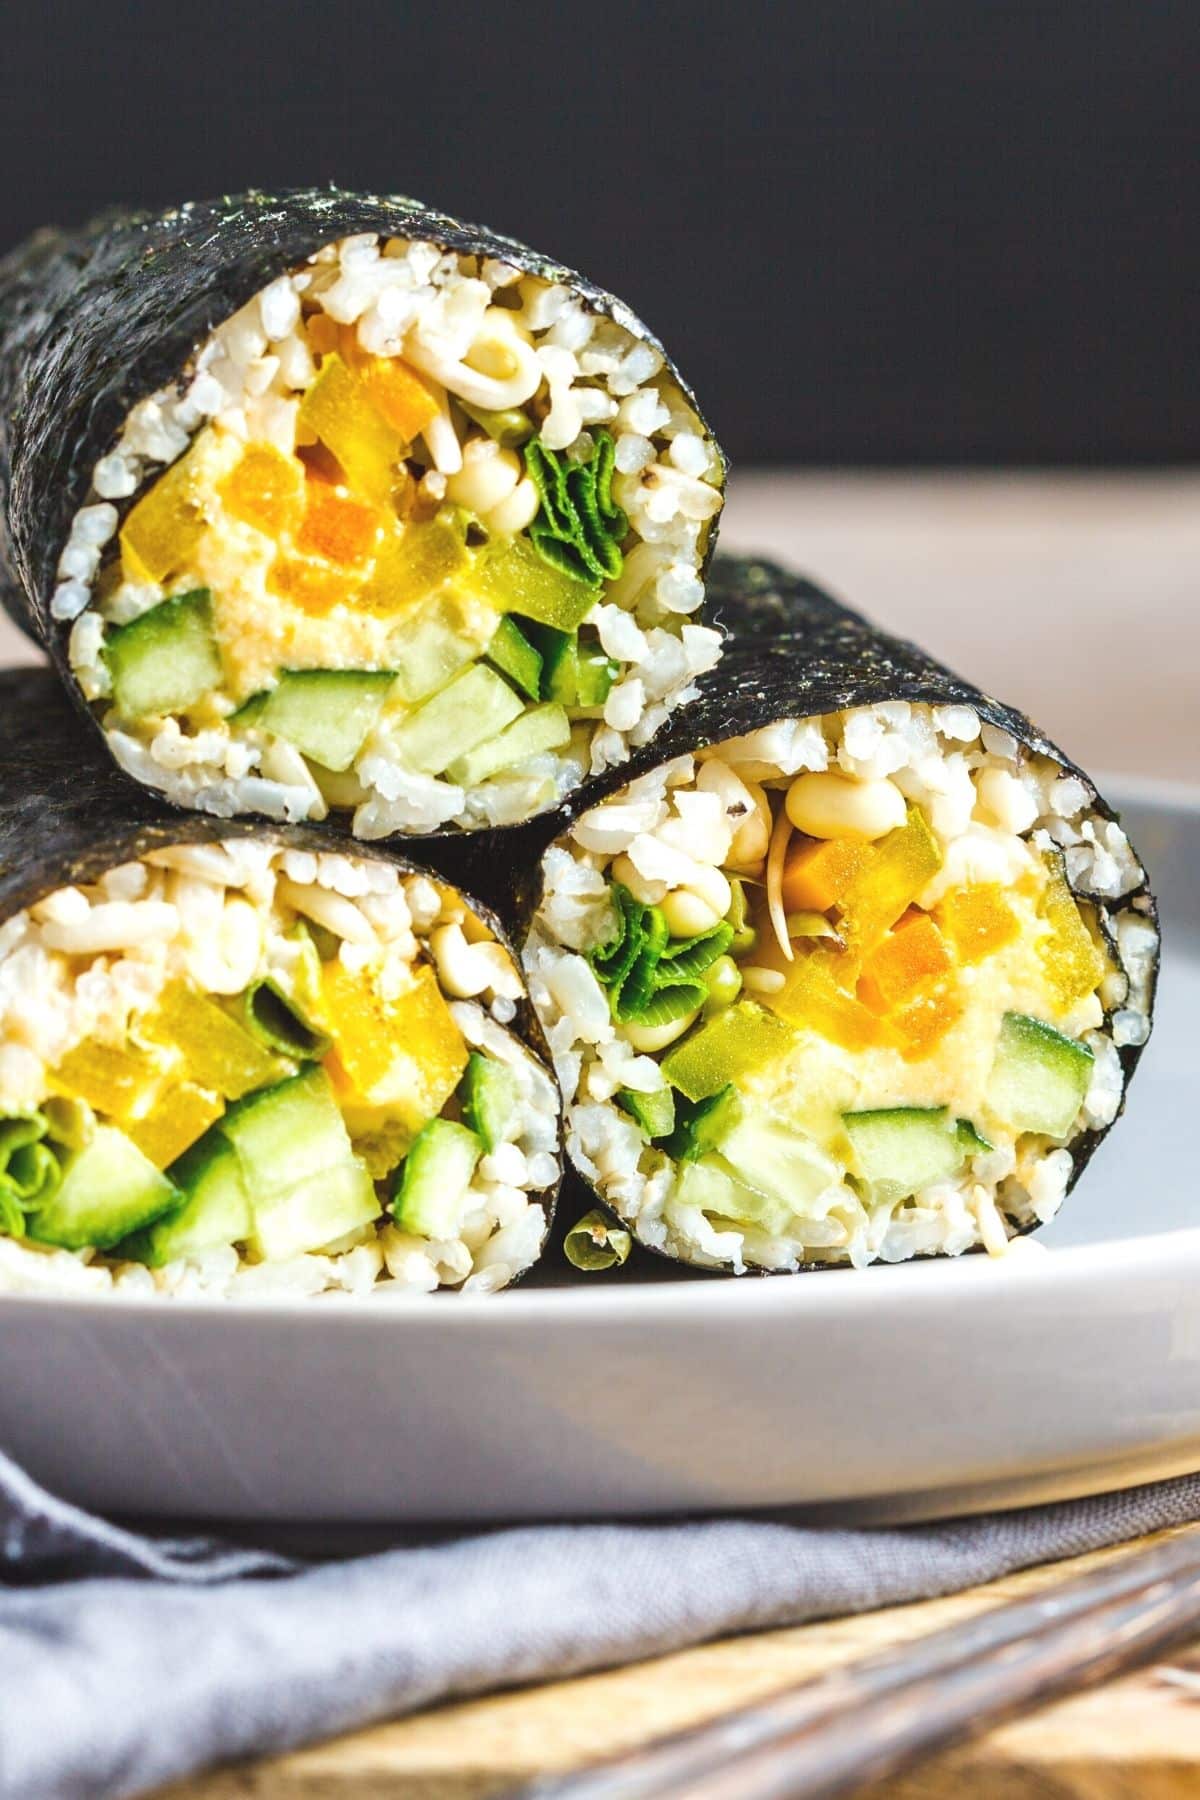 nori wraps with veggies and rice.